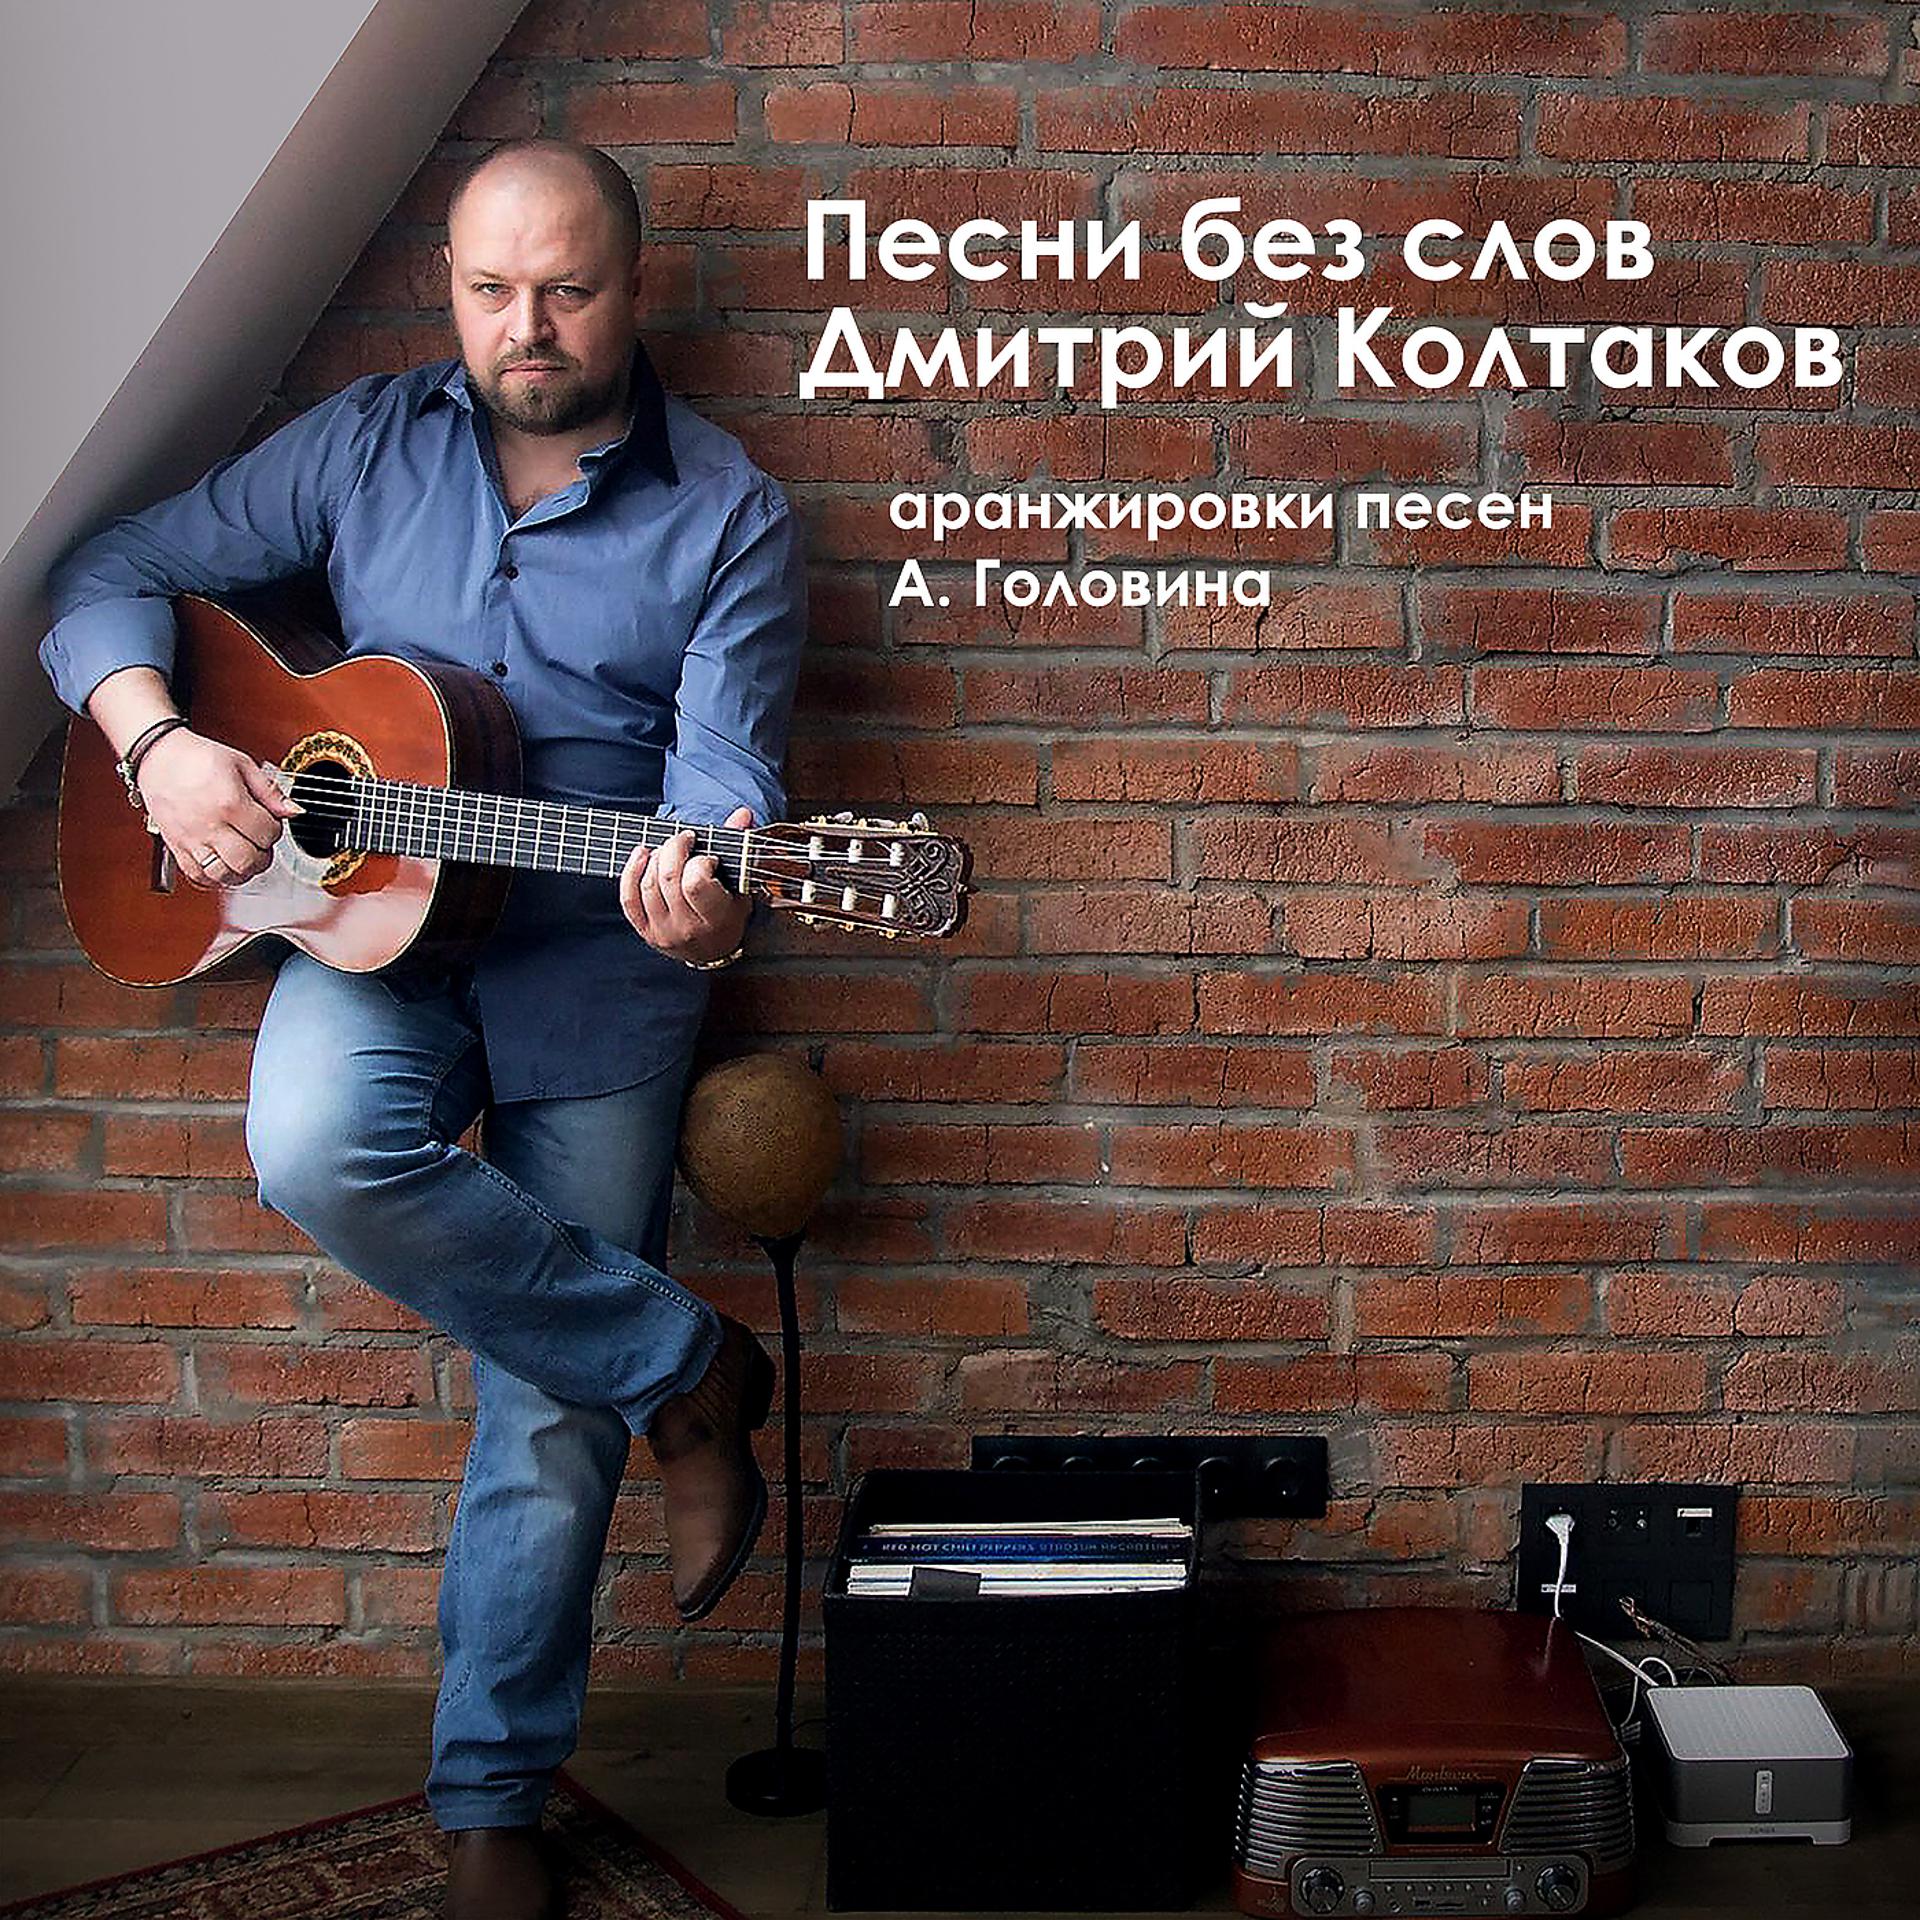 Постер альбома "песни без слов"дмитрий колтаков аранжировки песен а. головина